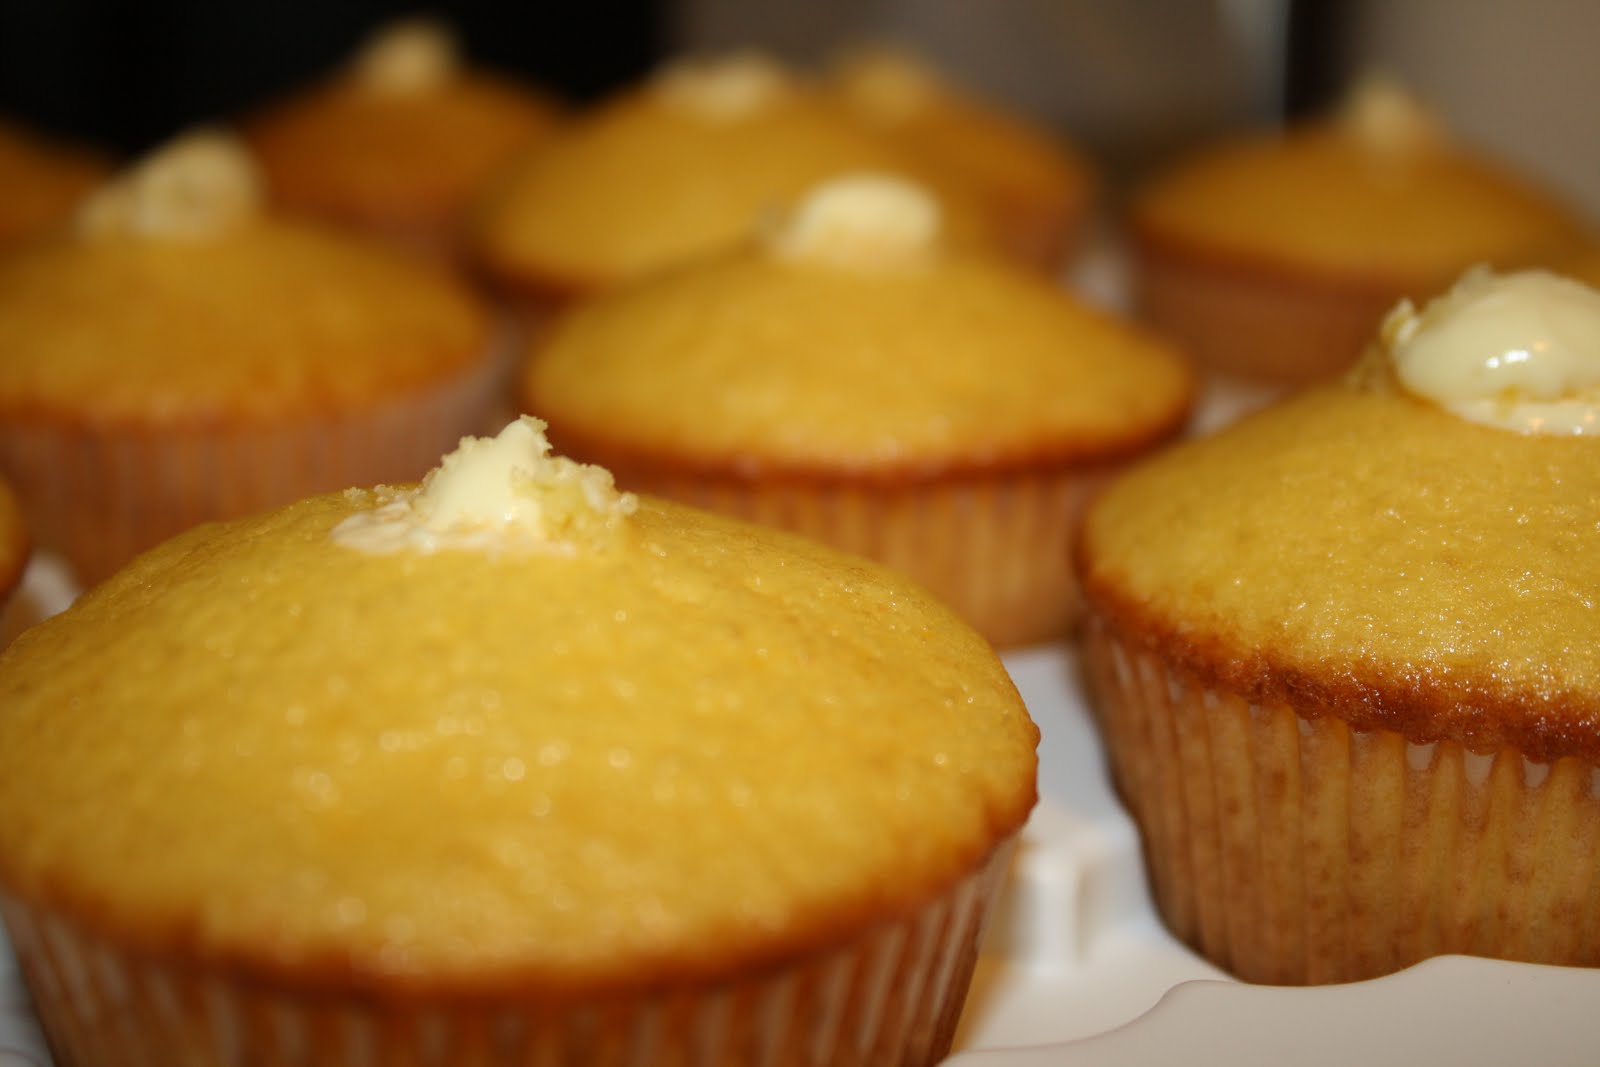 Lemon Filled Cupcakes